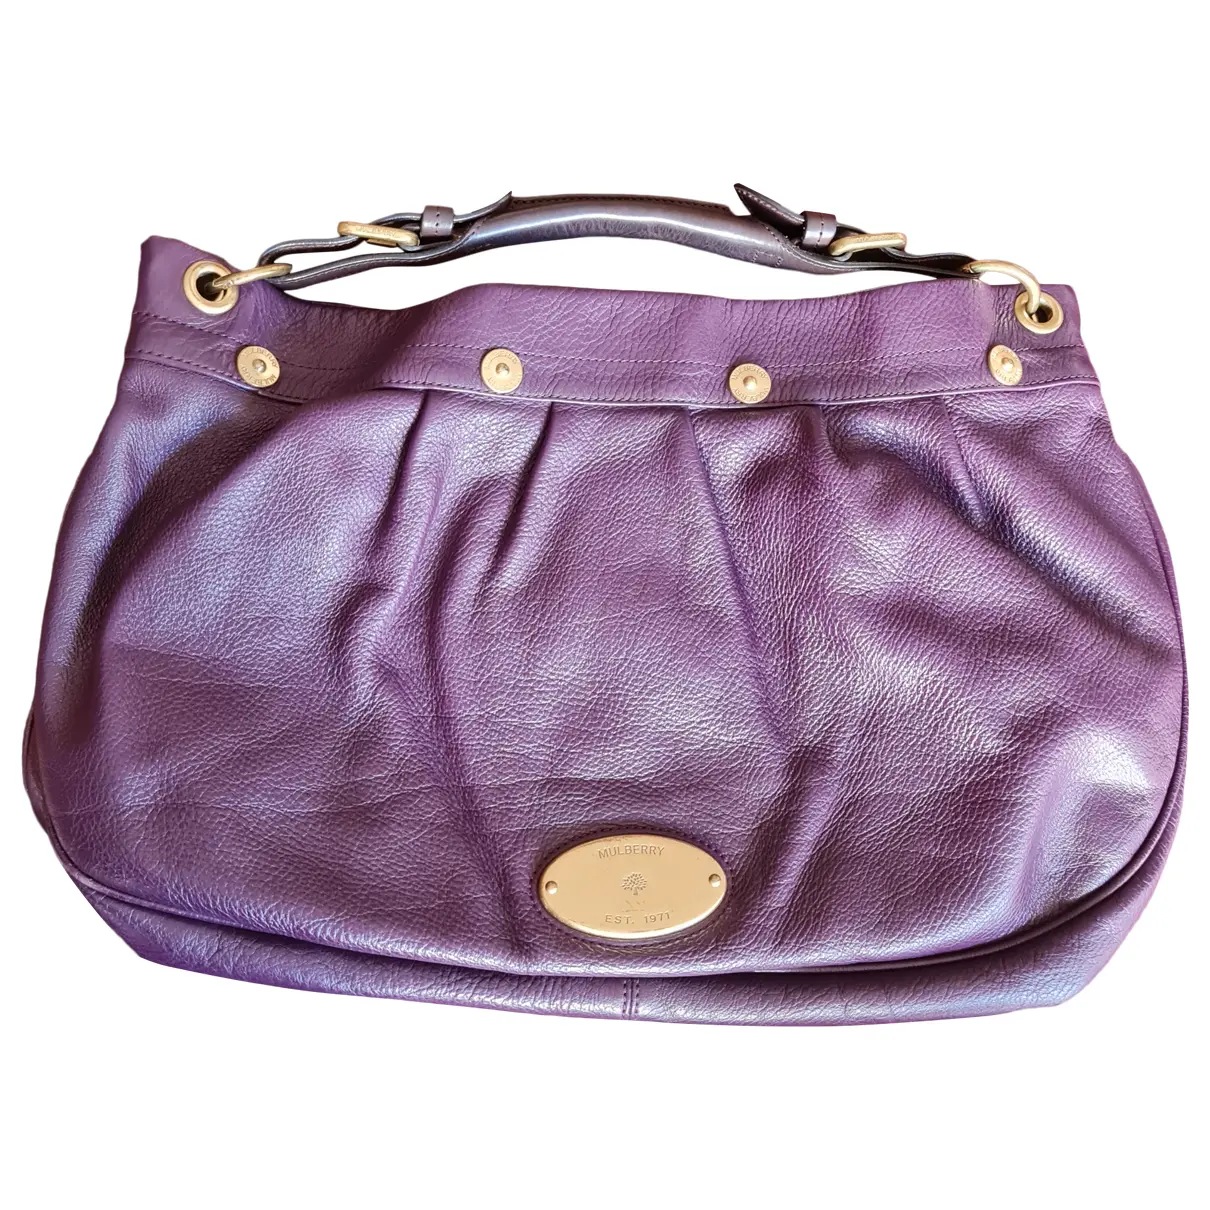 Bella Hobo leather handbag Mulberry